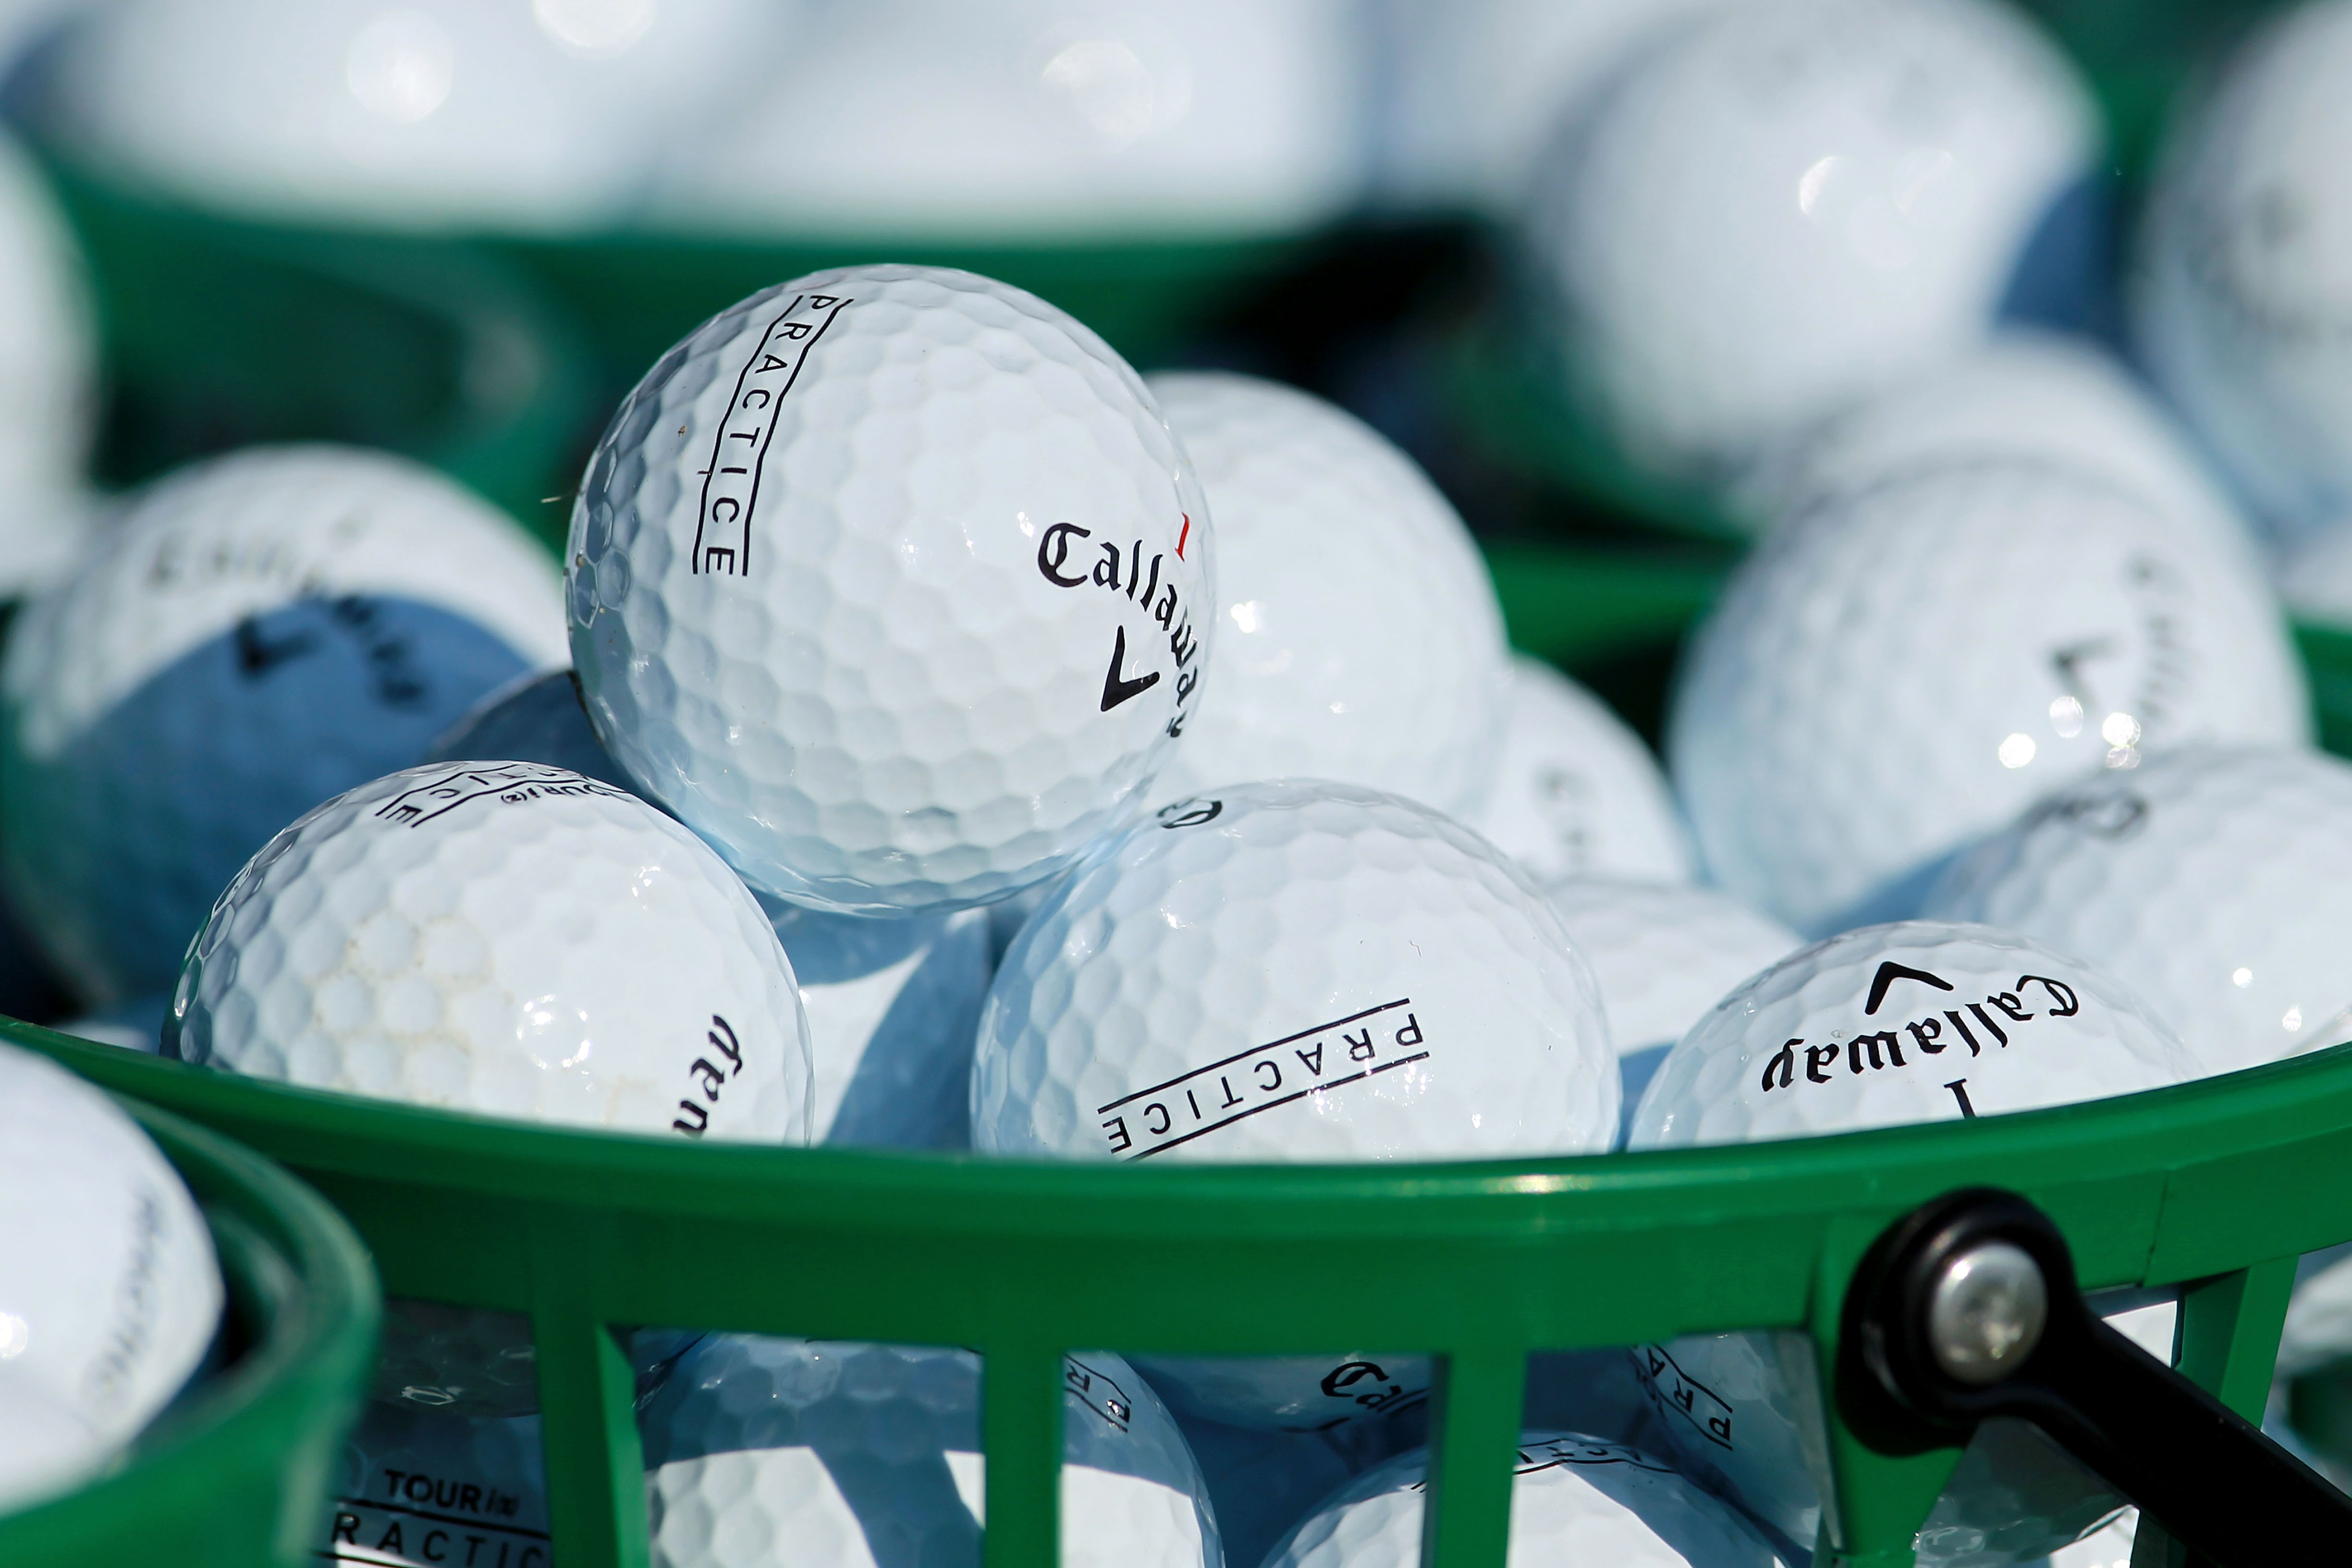 Golf Brand Callaway Joins LinksDAO as Equity Investor, 'Strategic Partner'